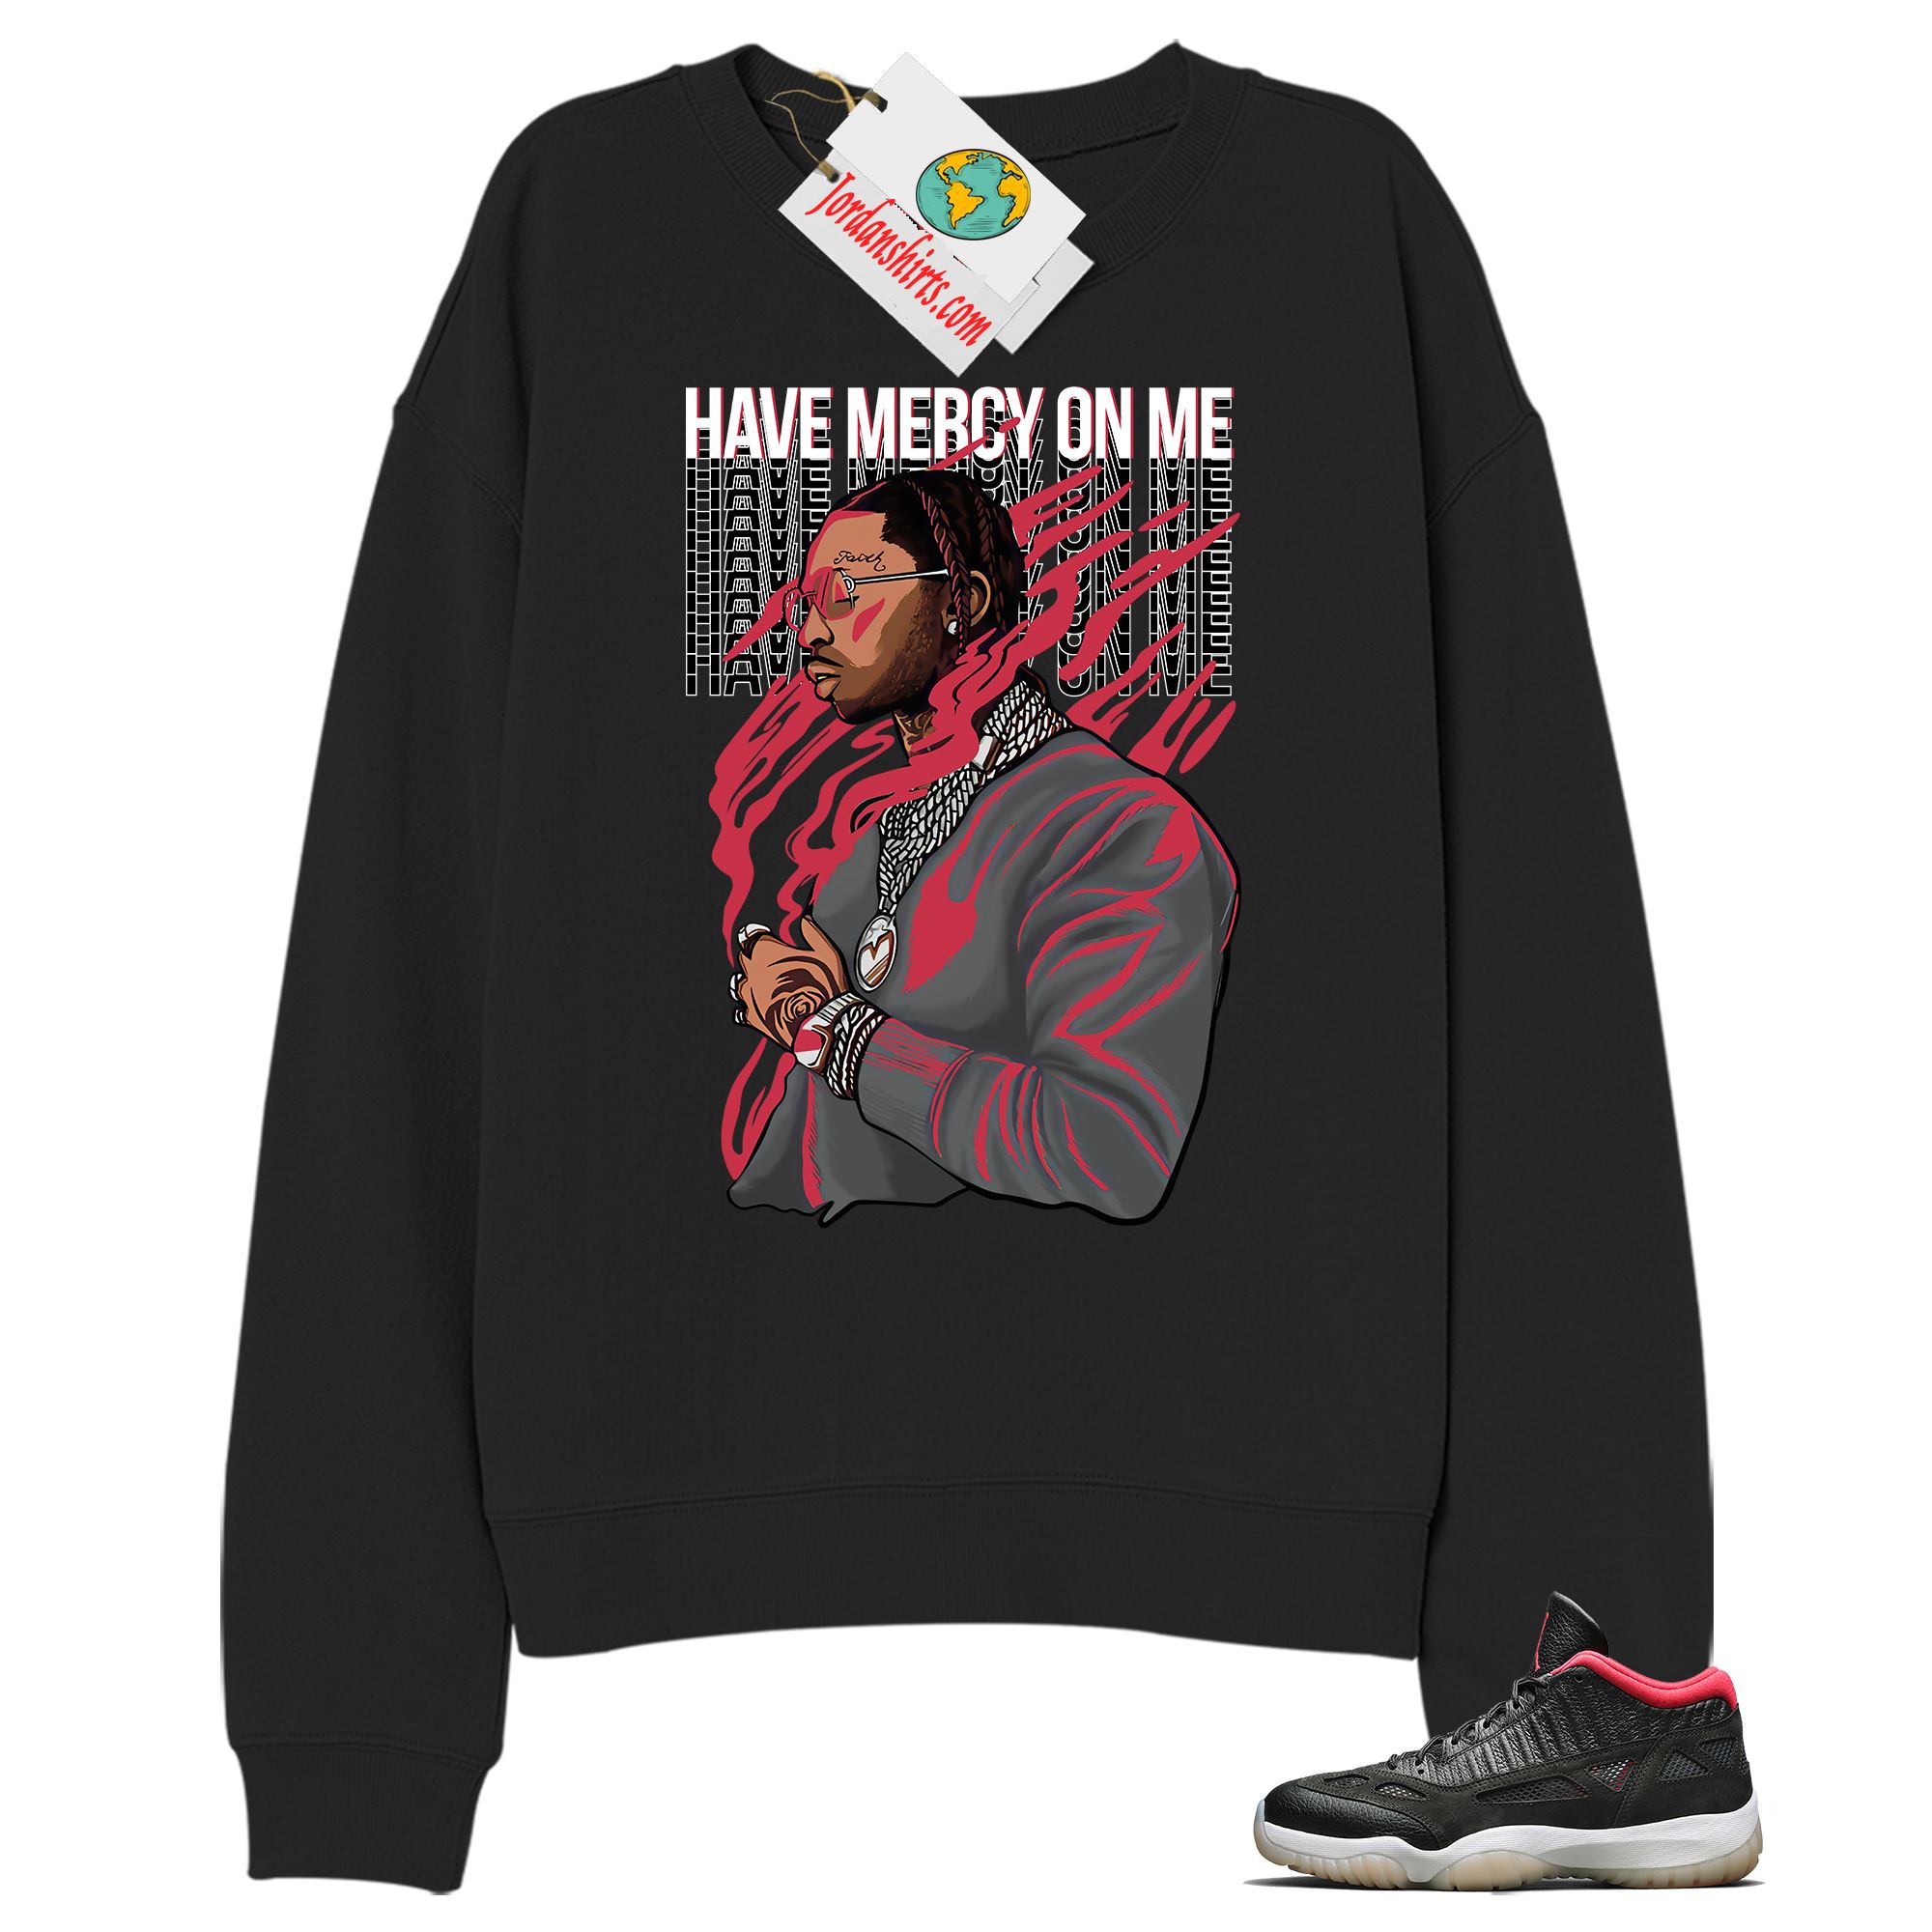 Jordan 11 Sweatshirt, Have Mercy On Me Black Sweatshirt Air Jordan 11 Bred 11s Plus Size Up To 5xl